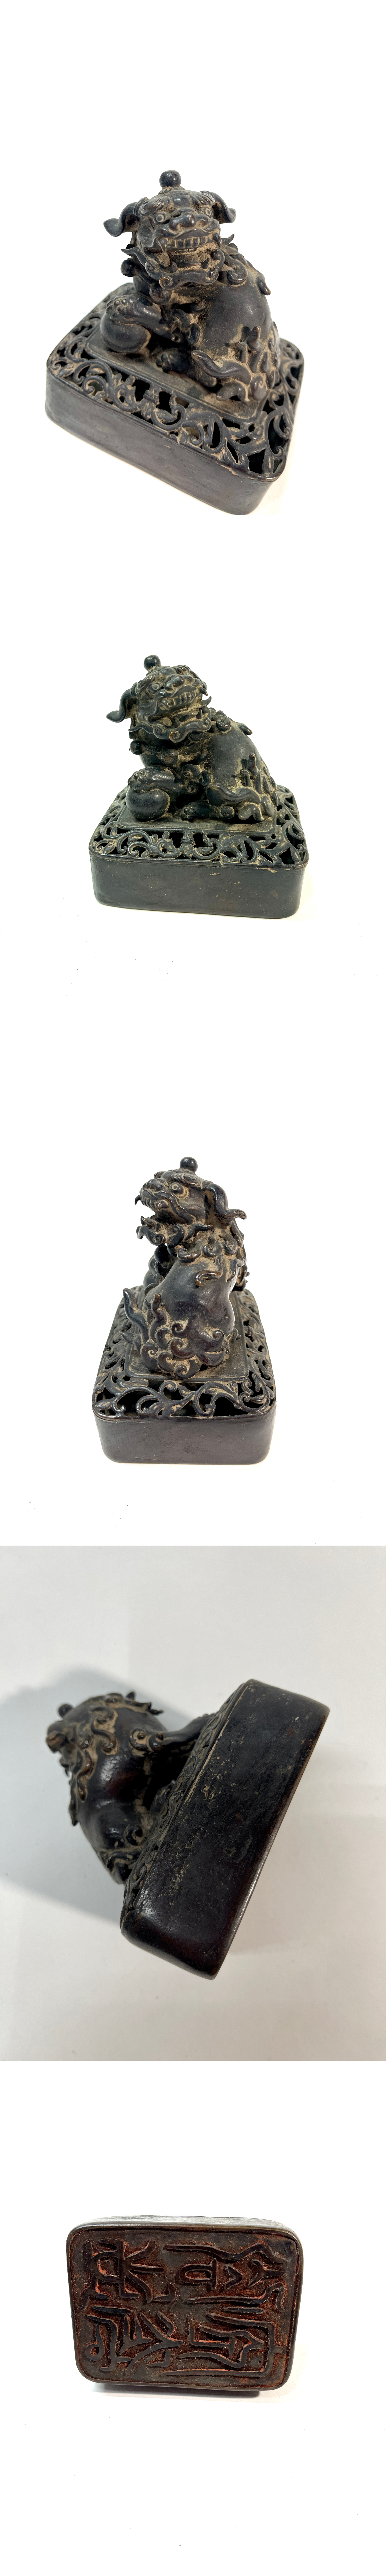 激安単価で 中国唐物 大きな古銅の獅子型 印 文房具書銅器獅子青銅器